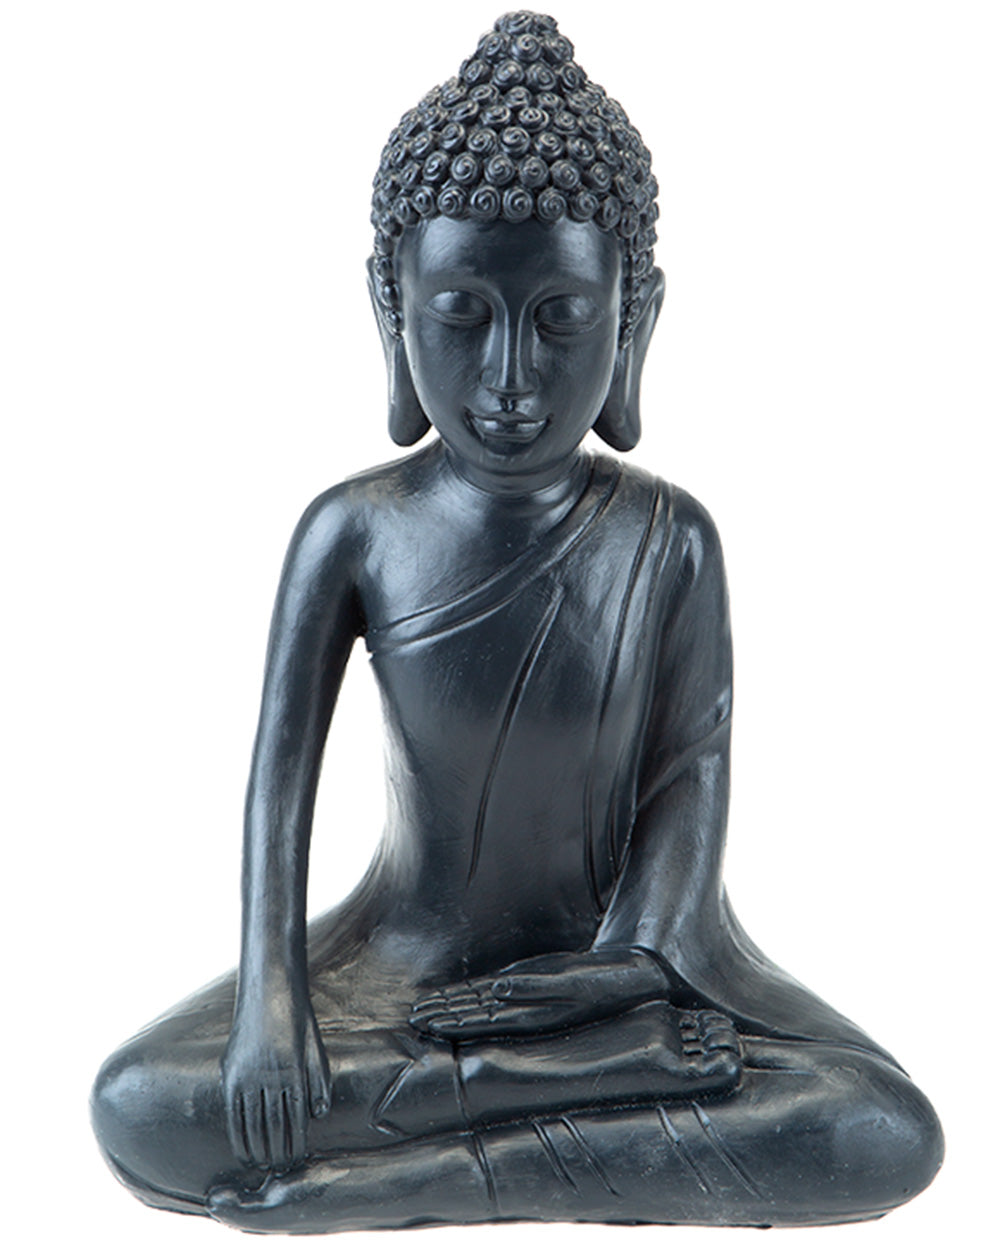 Meditating Garden Buddha Ornament Zen